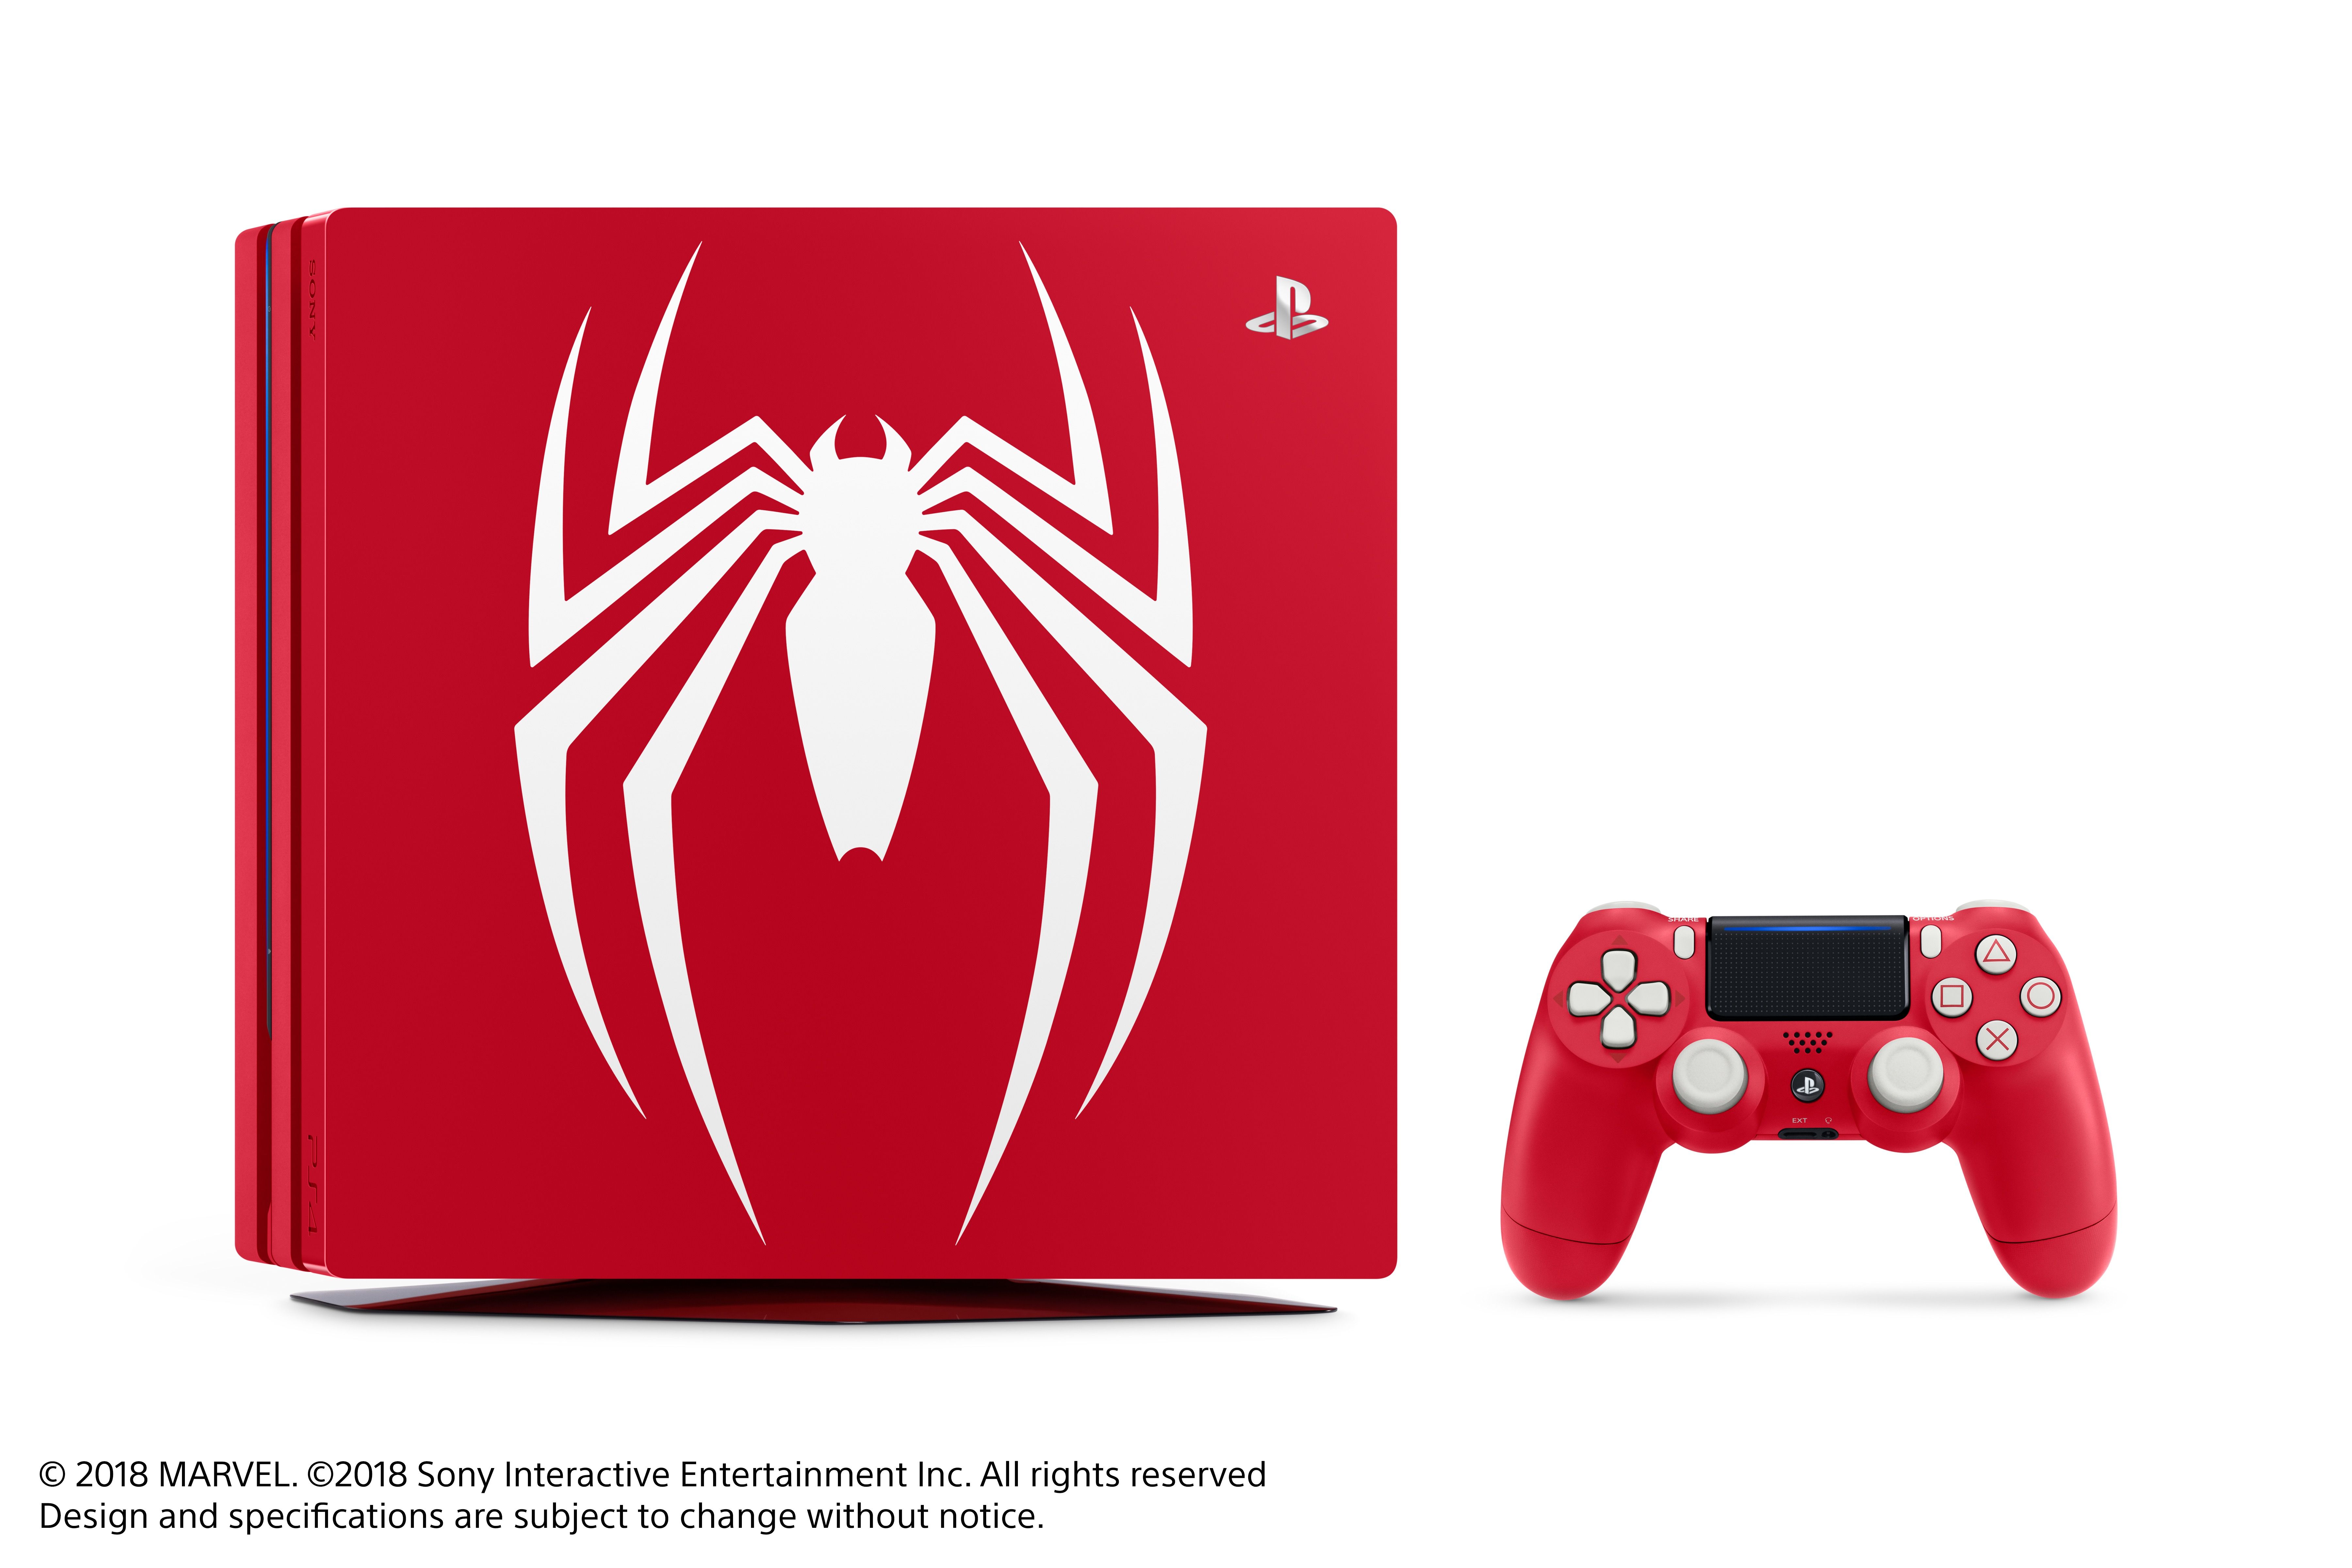 spider-man edition ps4